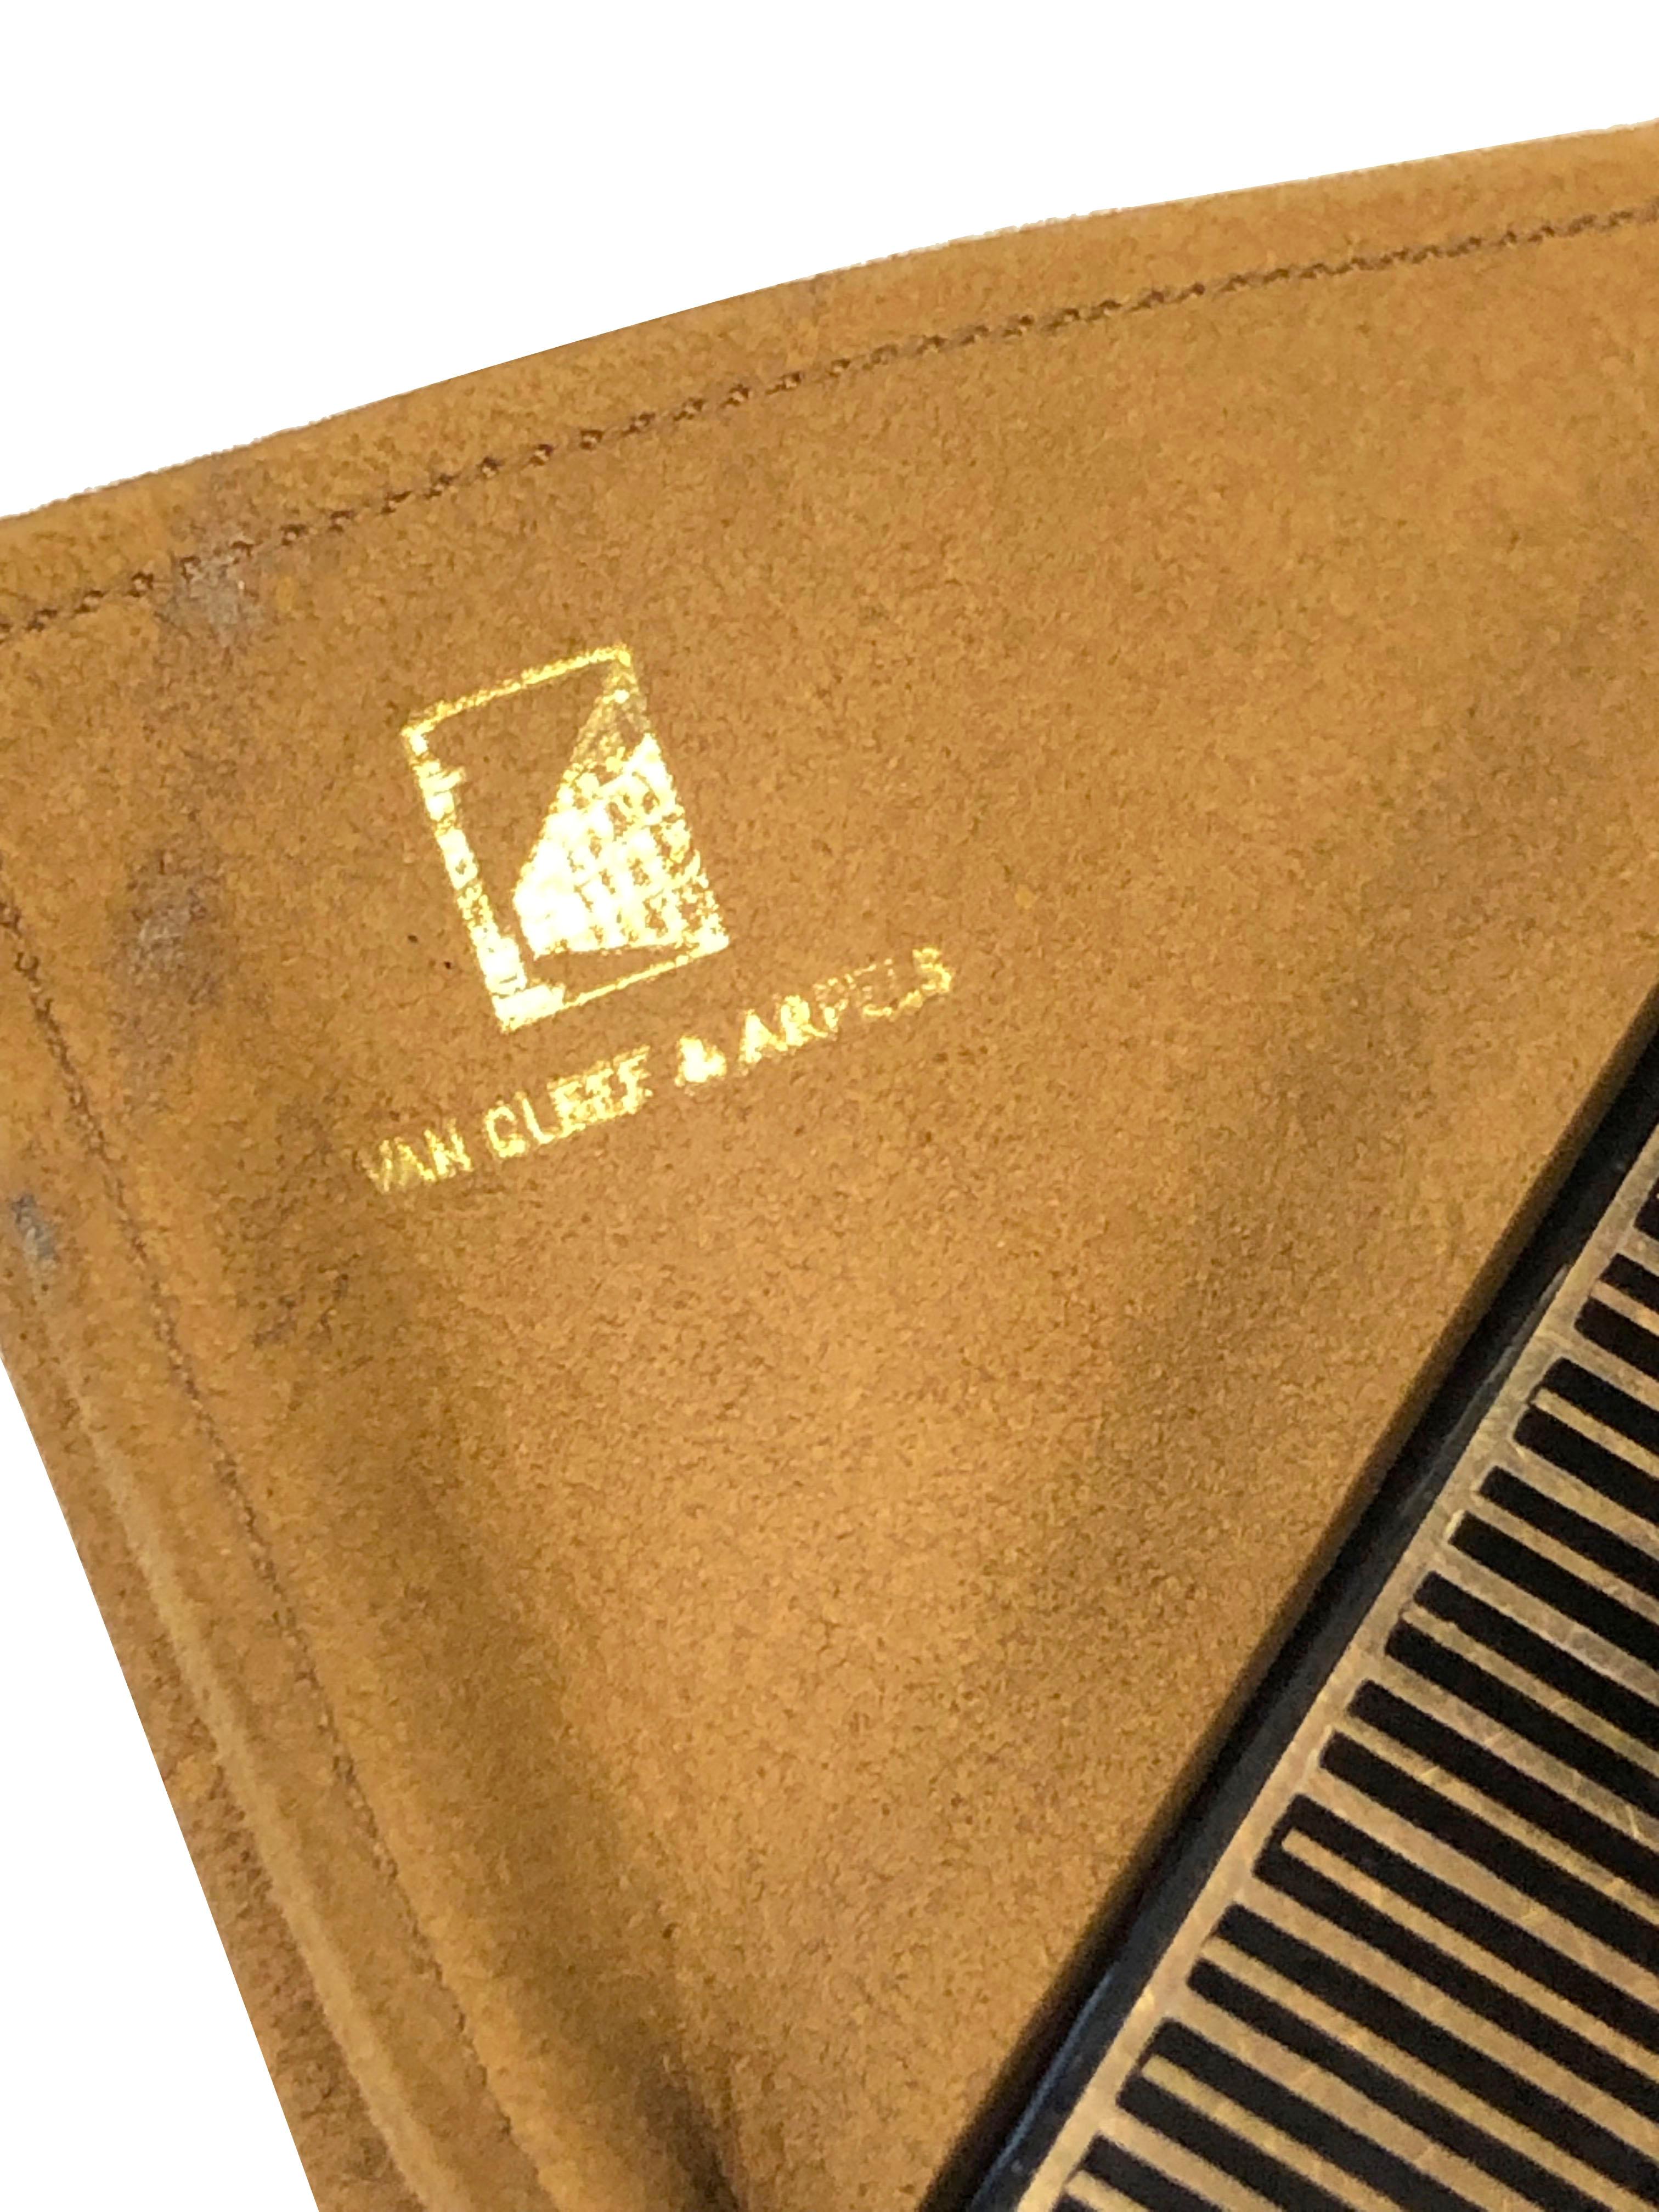 Van Cleef & Arpels Vintage Enamel Cigarette Case 5